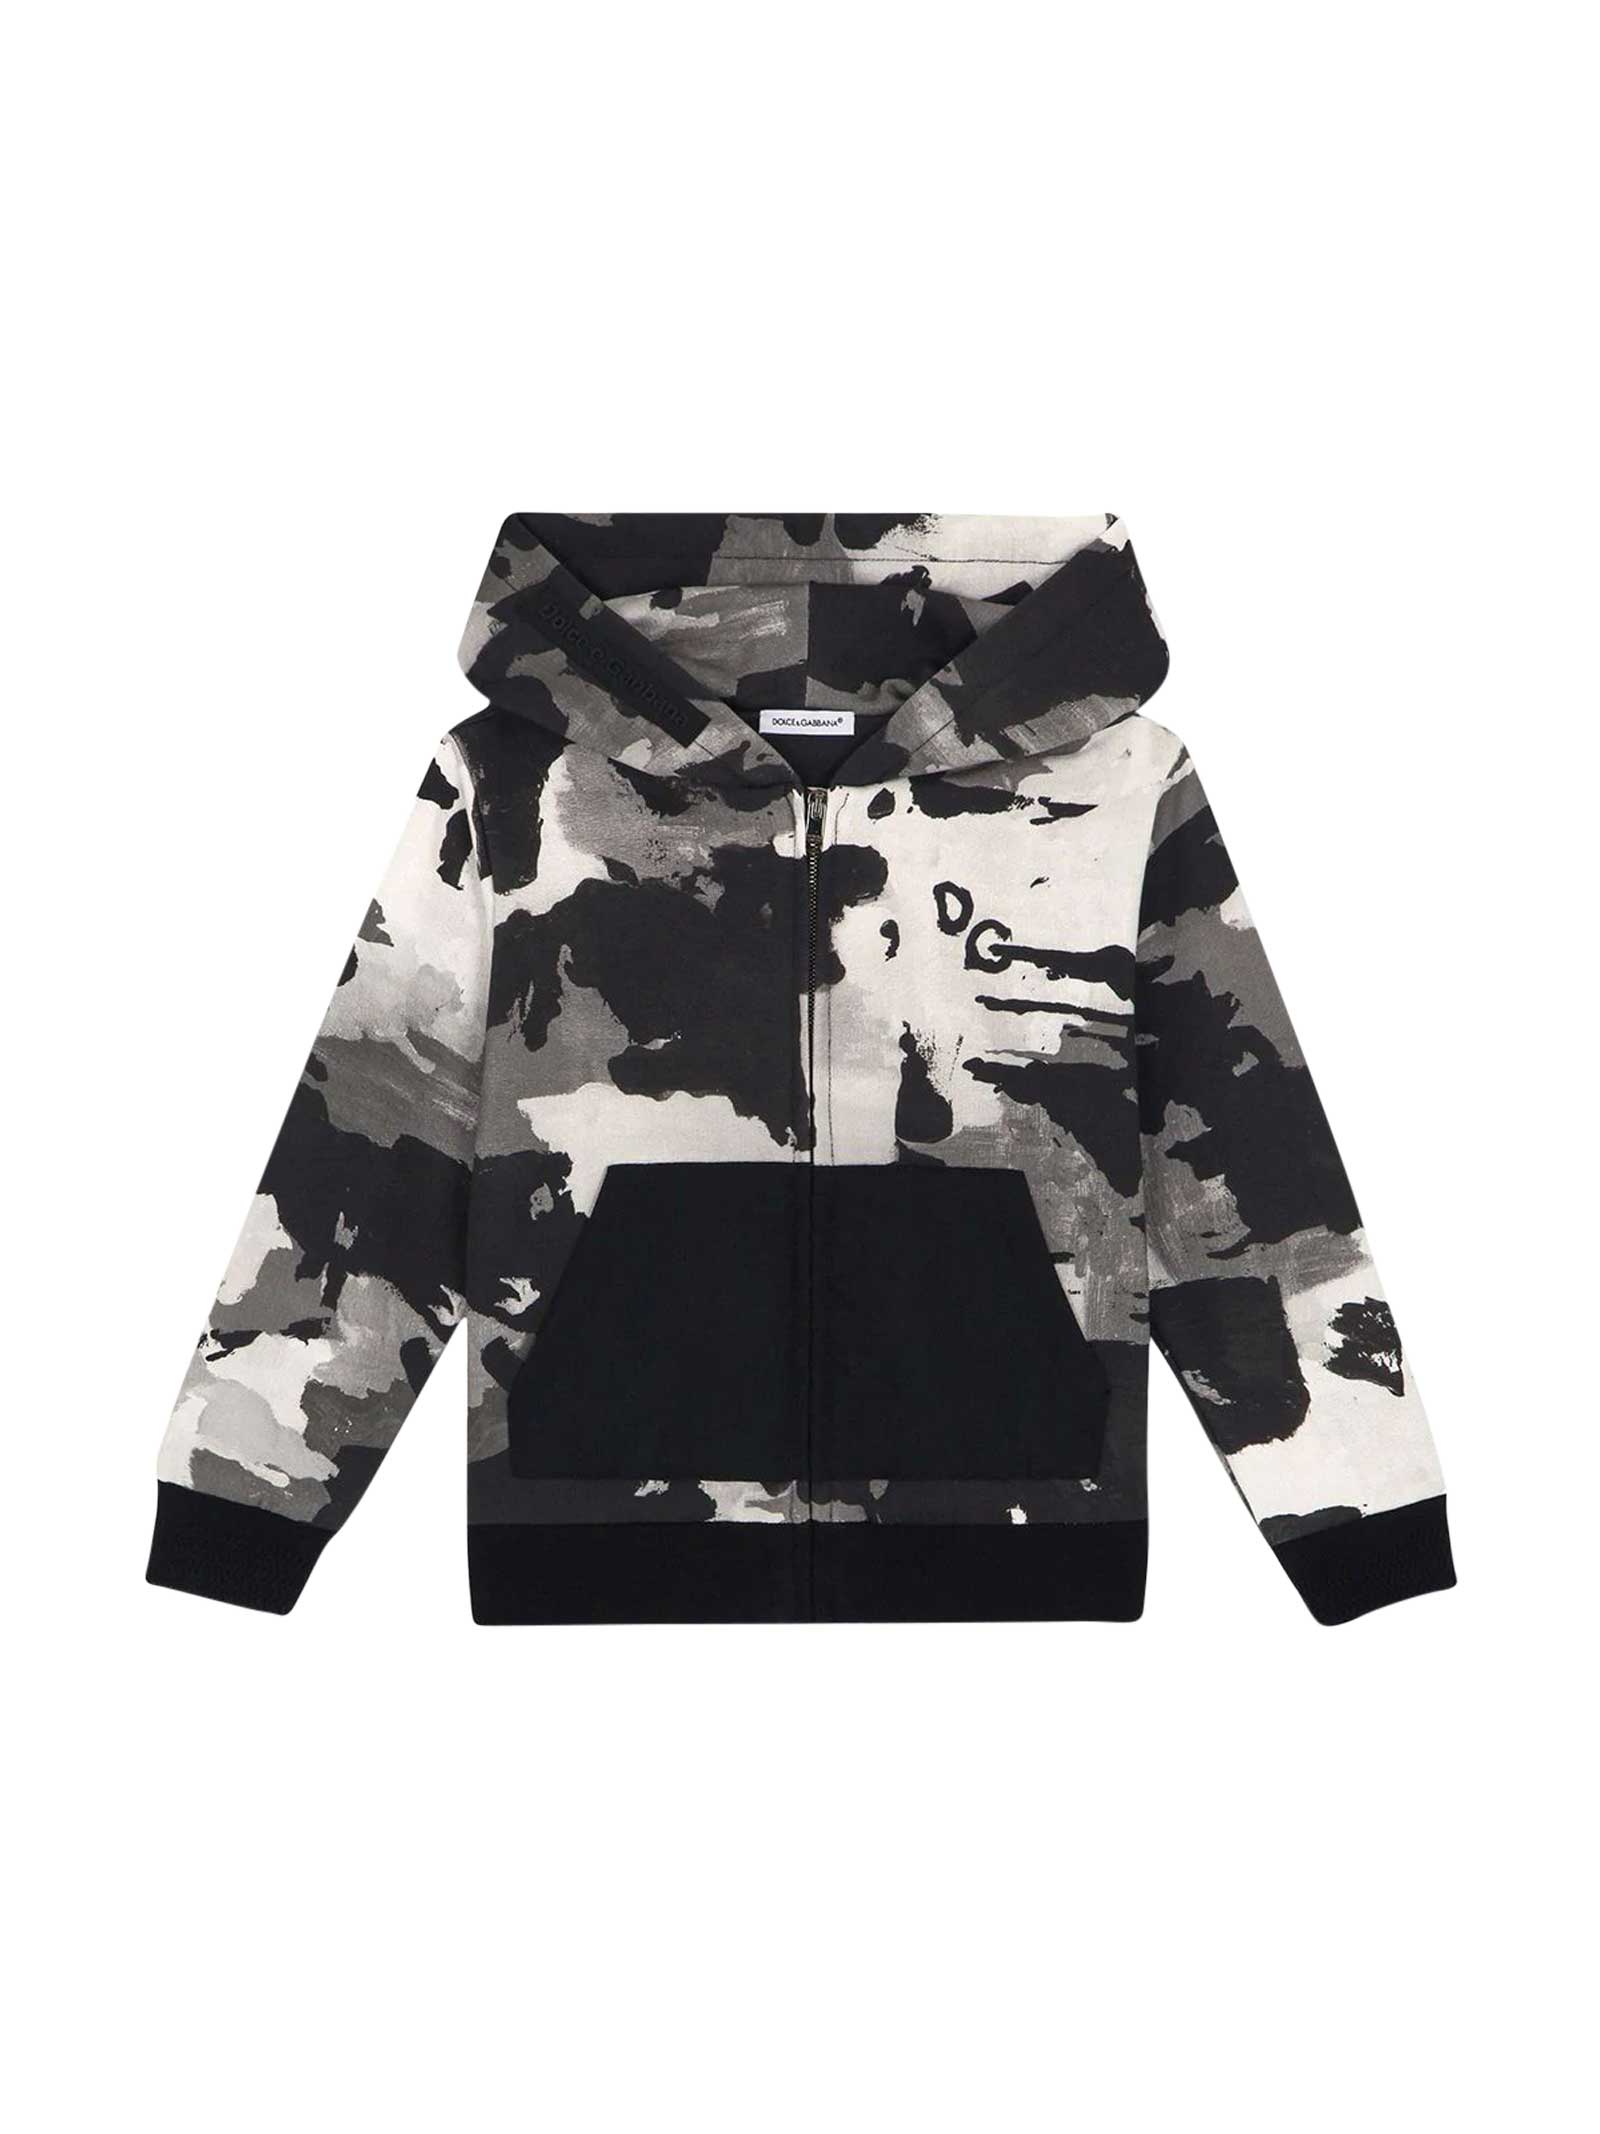 Dolce & Gabbana Camouflage Sweatshirt